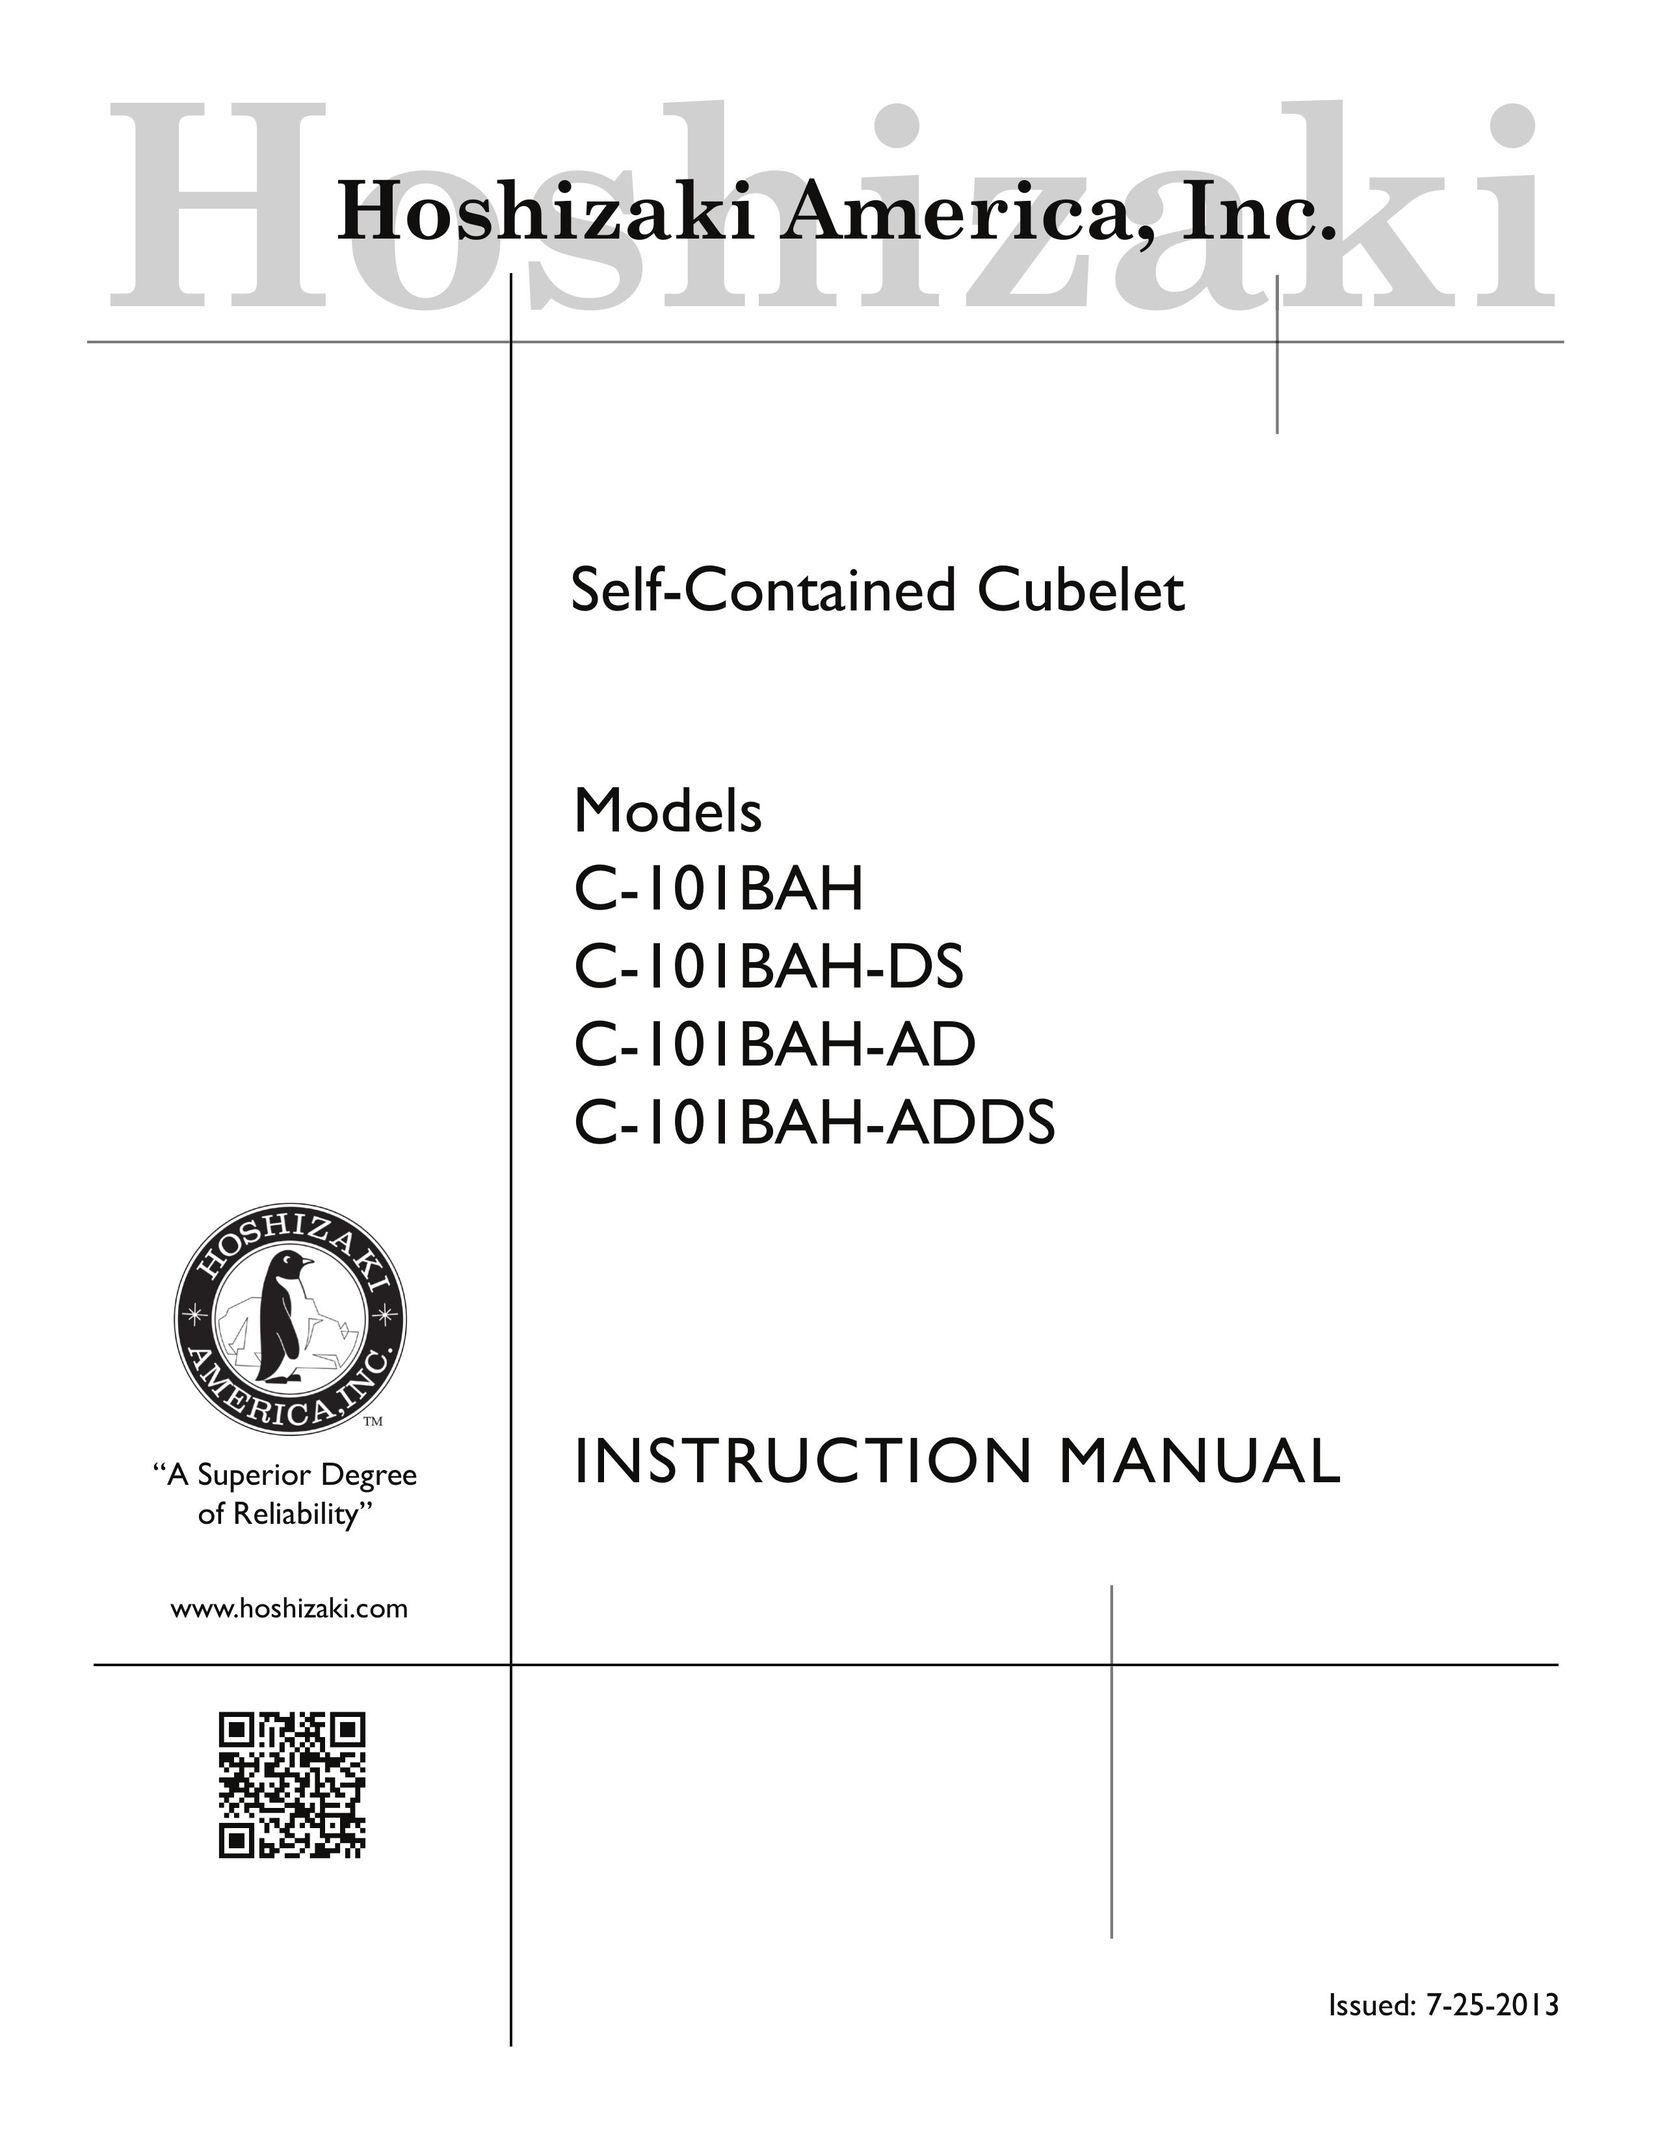 Hoshizaki C-101BAH-DS Freezer User Manual